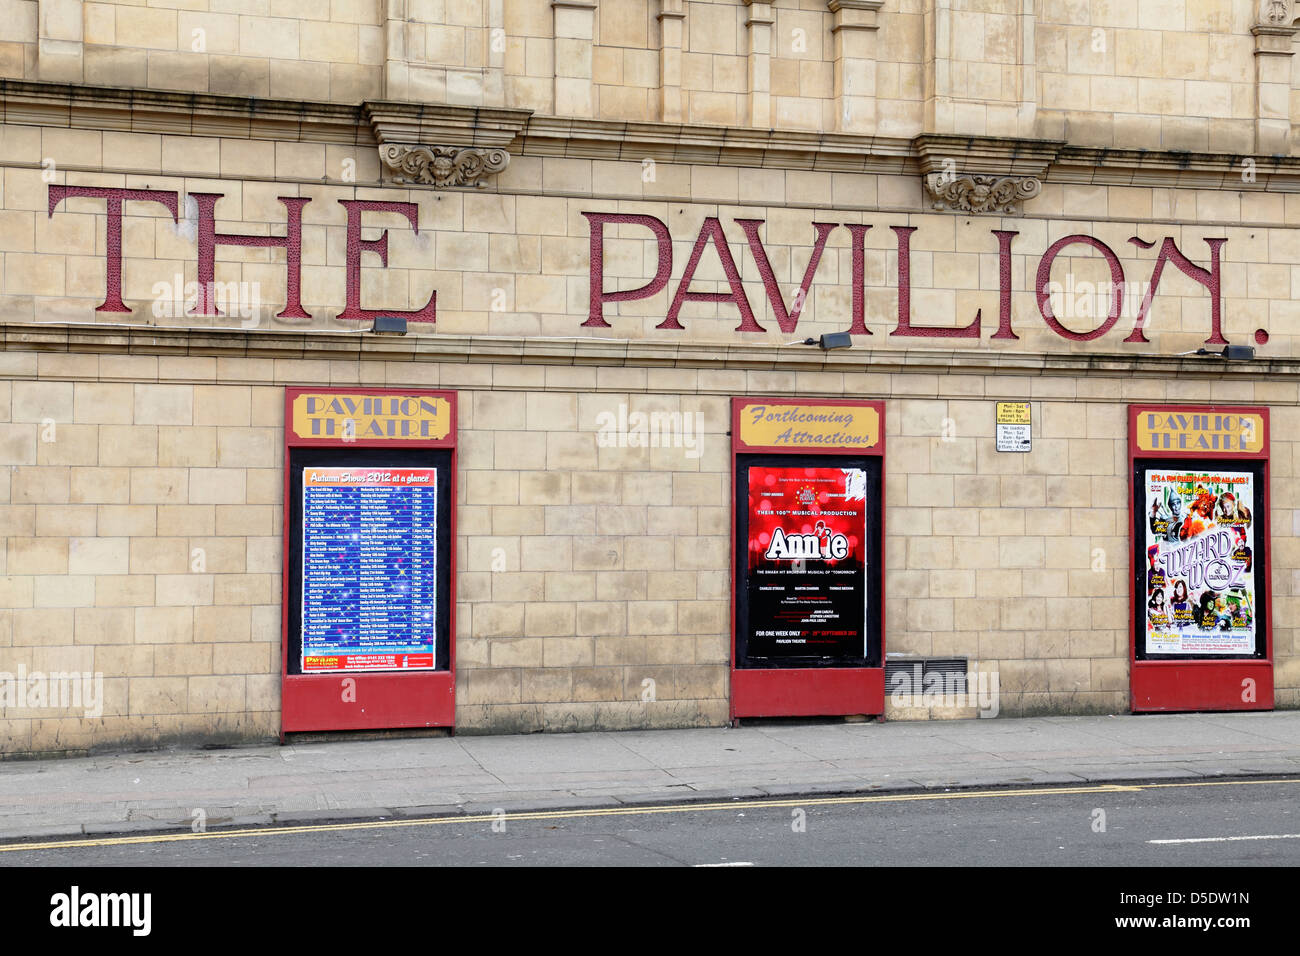 Pavilion Theatre sign on Renfrew Street, Glasgow city centre, Scotland, UK Stock Photo